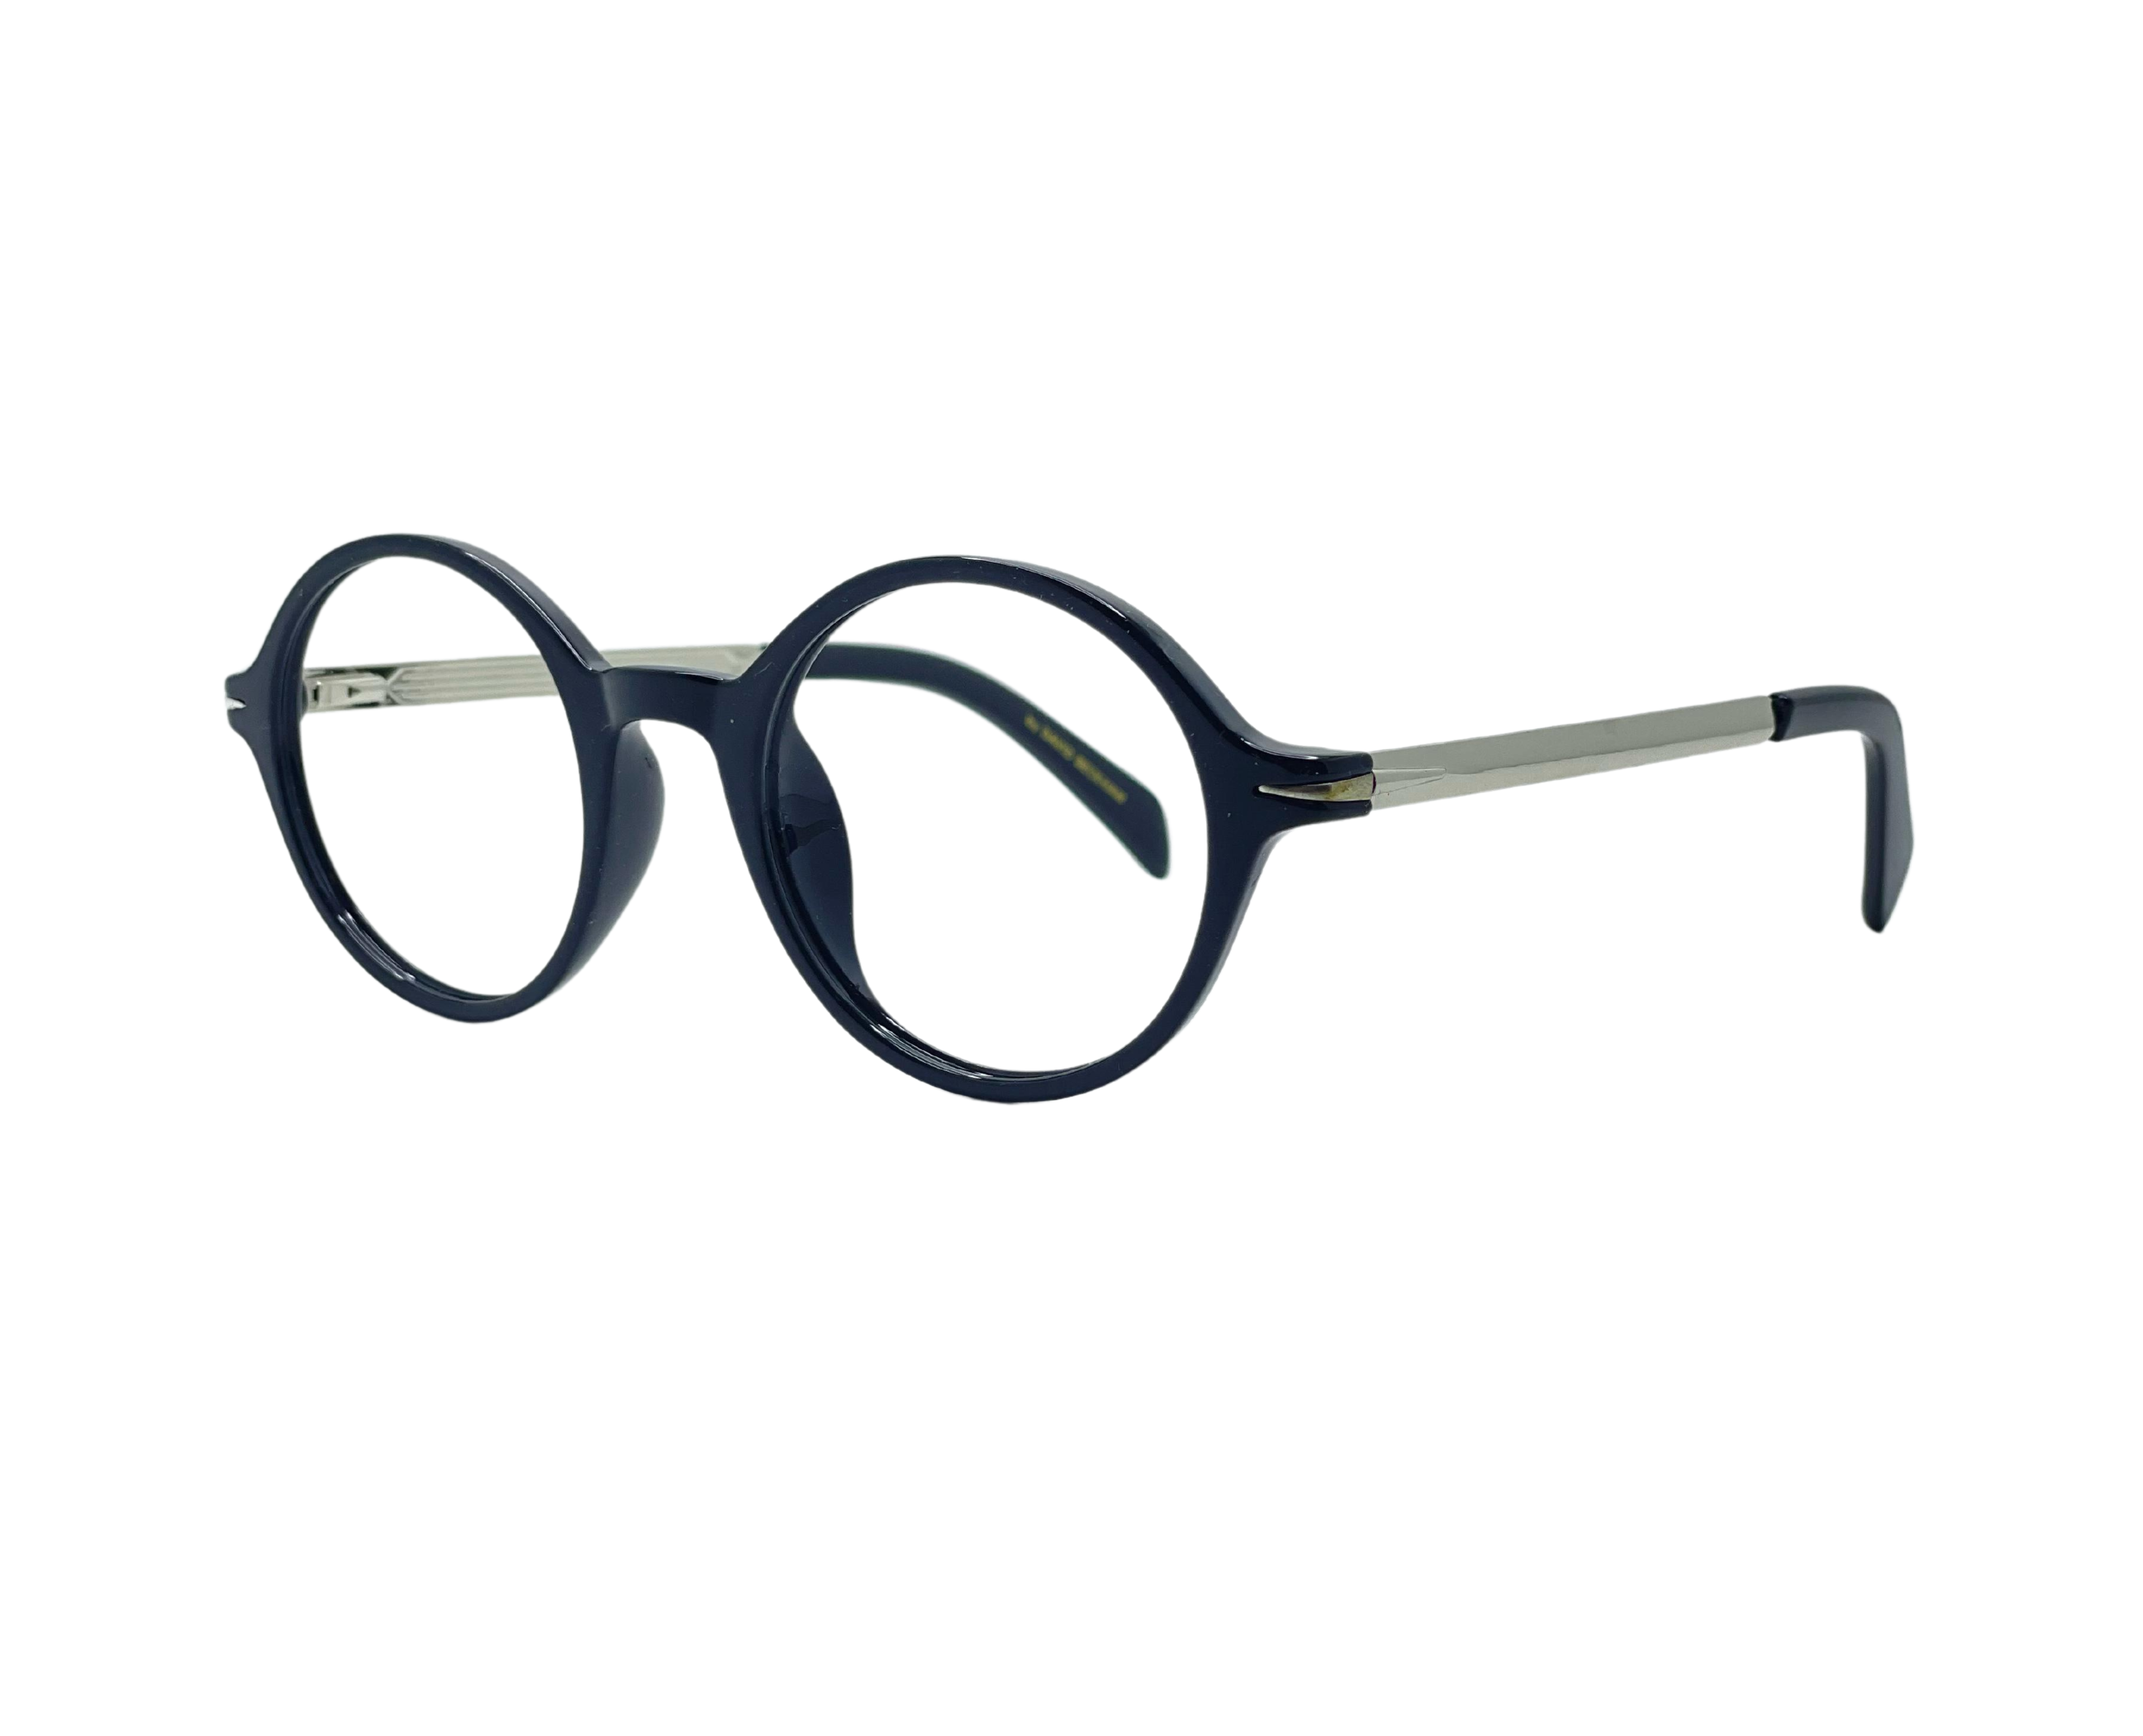  NS Deluxe - 1304 - Black - Eyeglasses